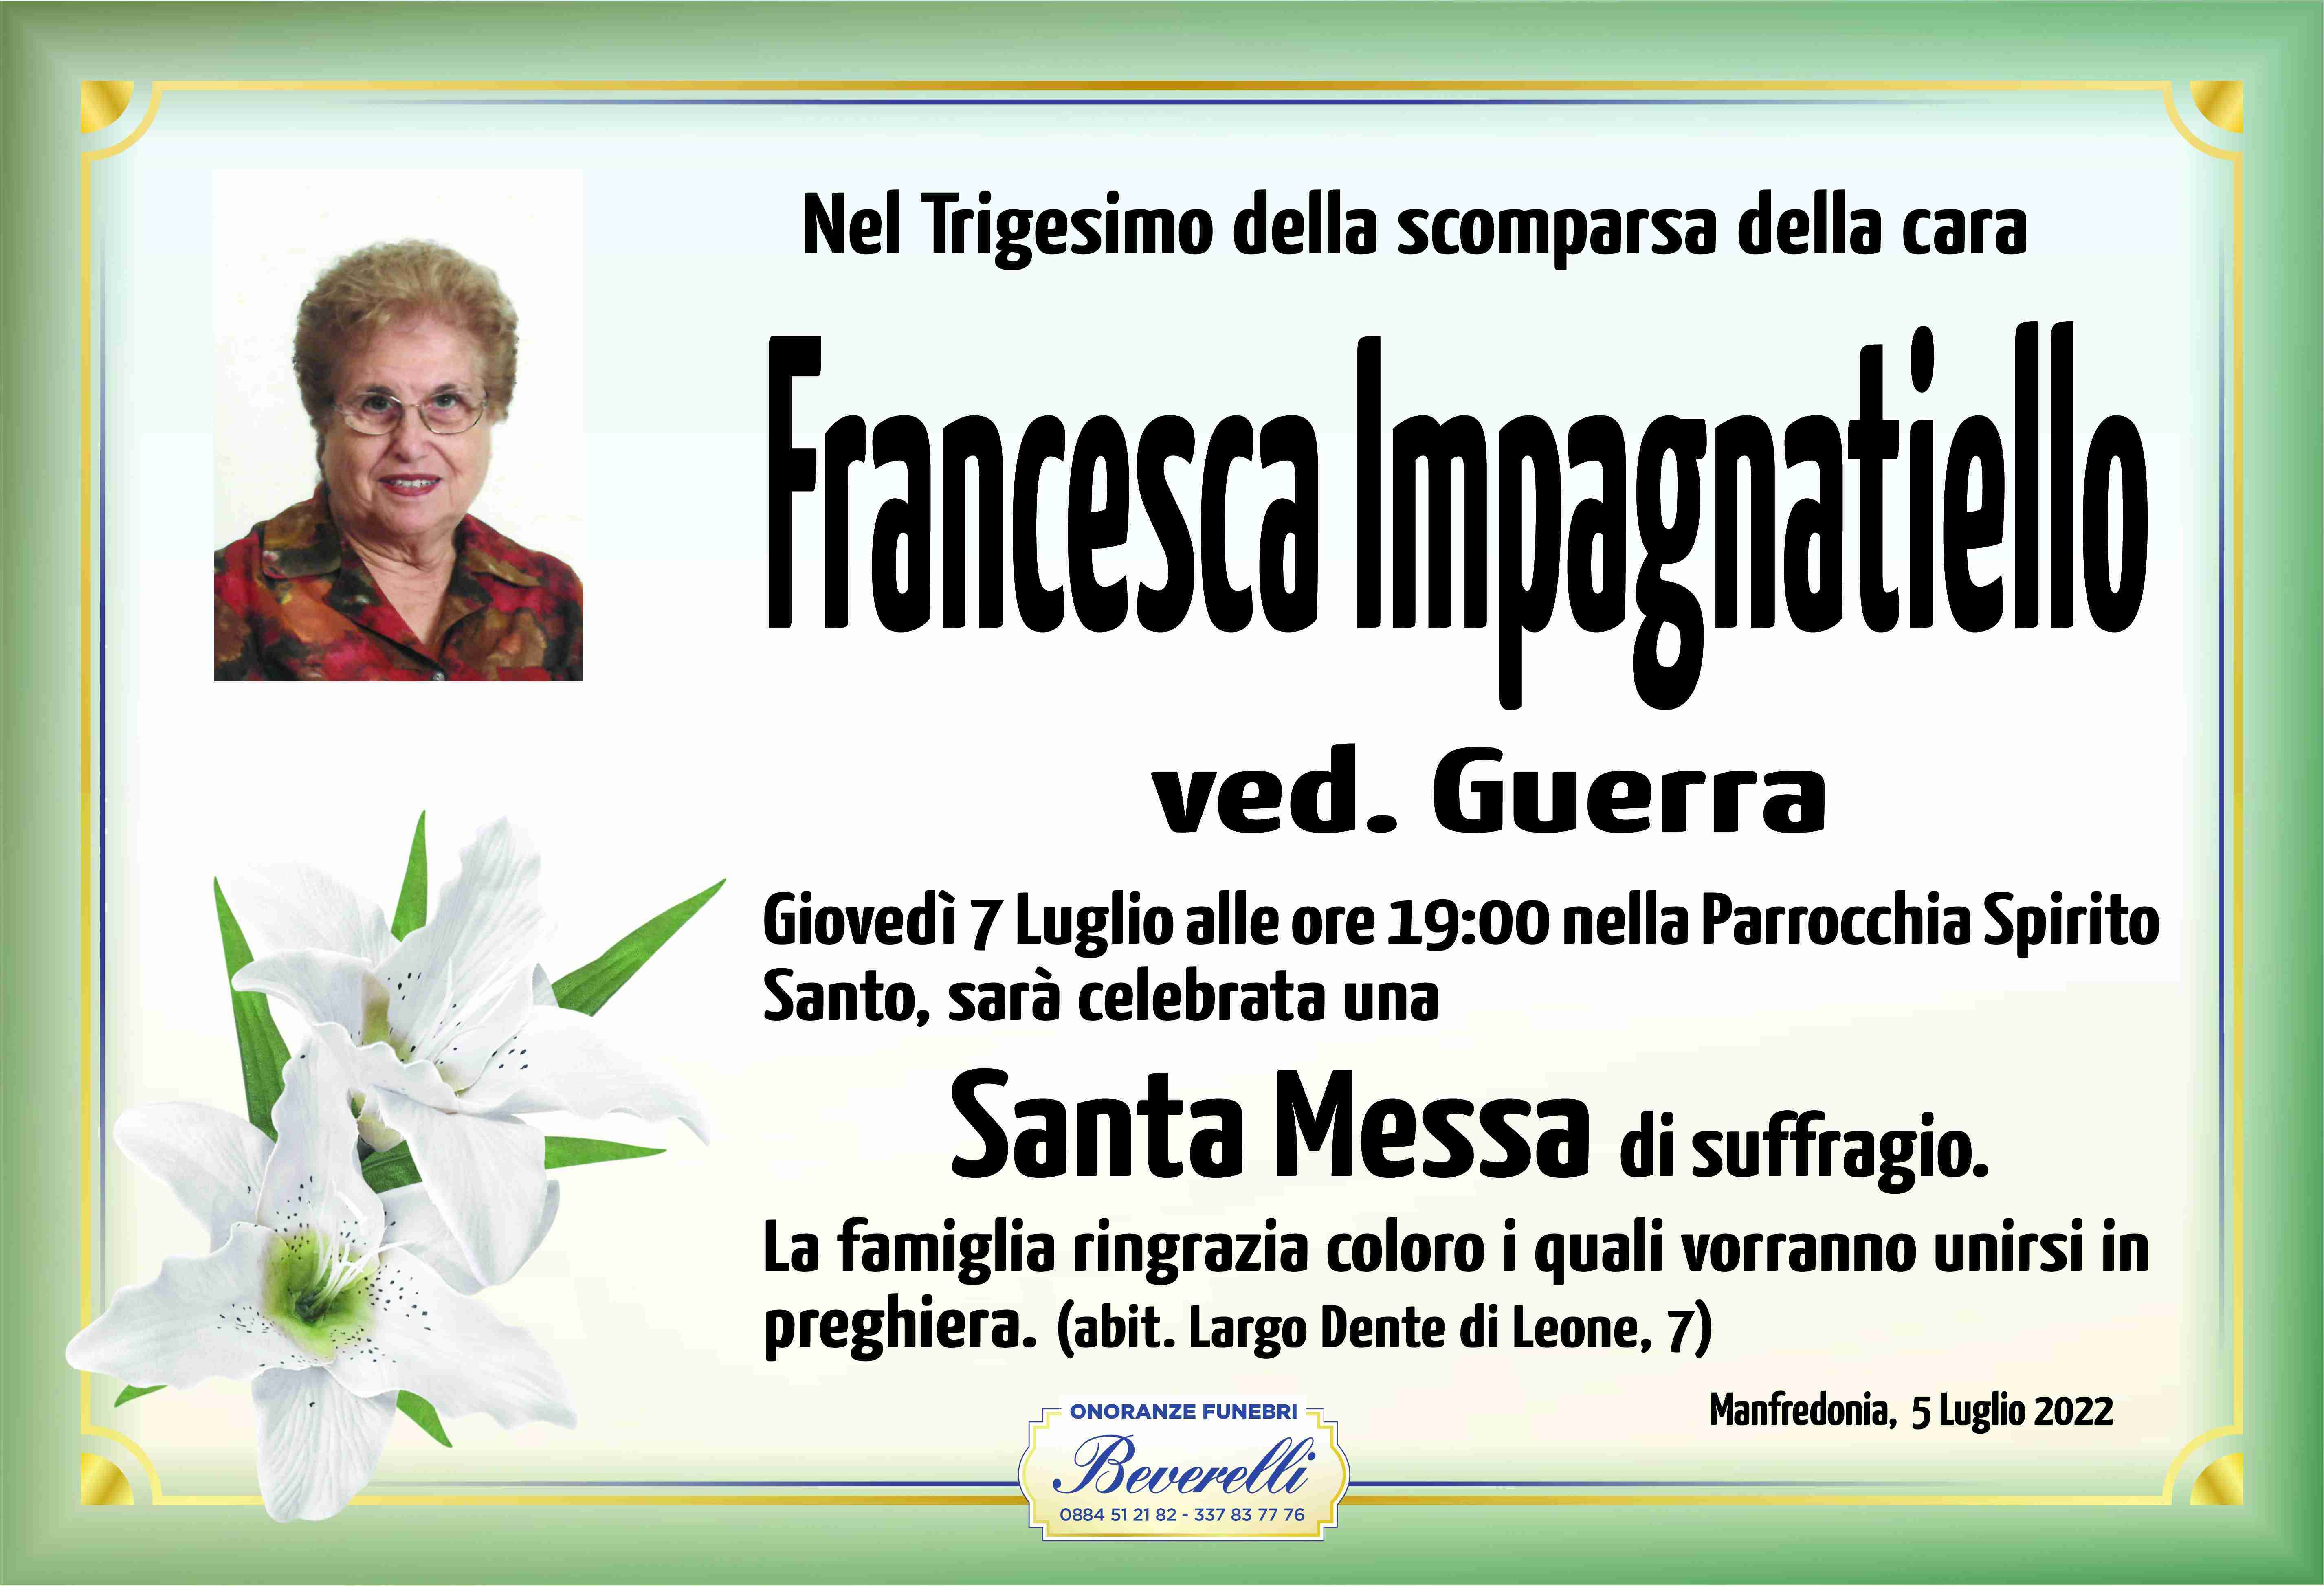 Francesca Impagnatiello